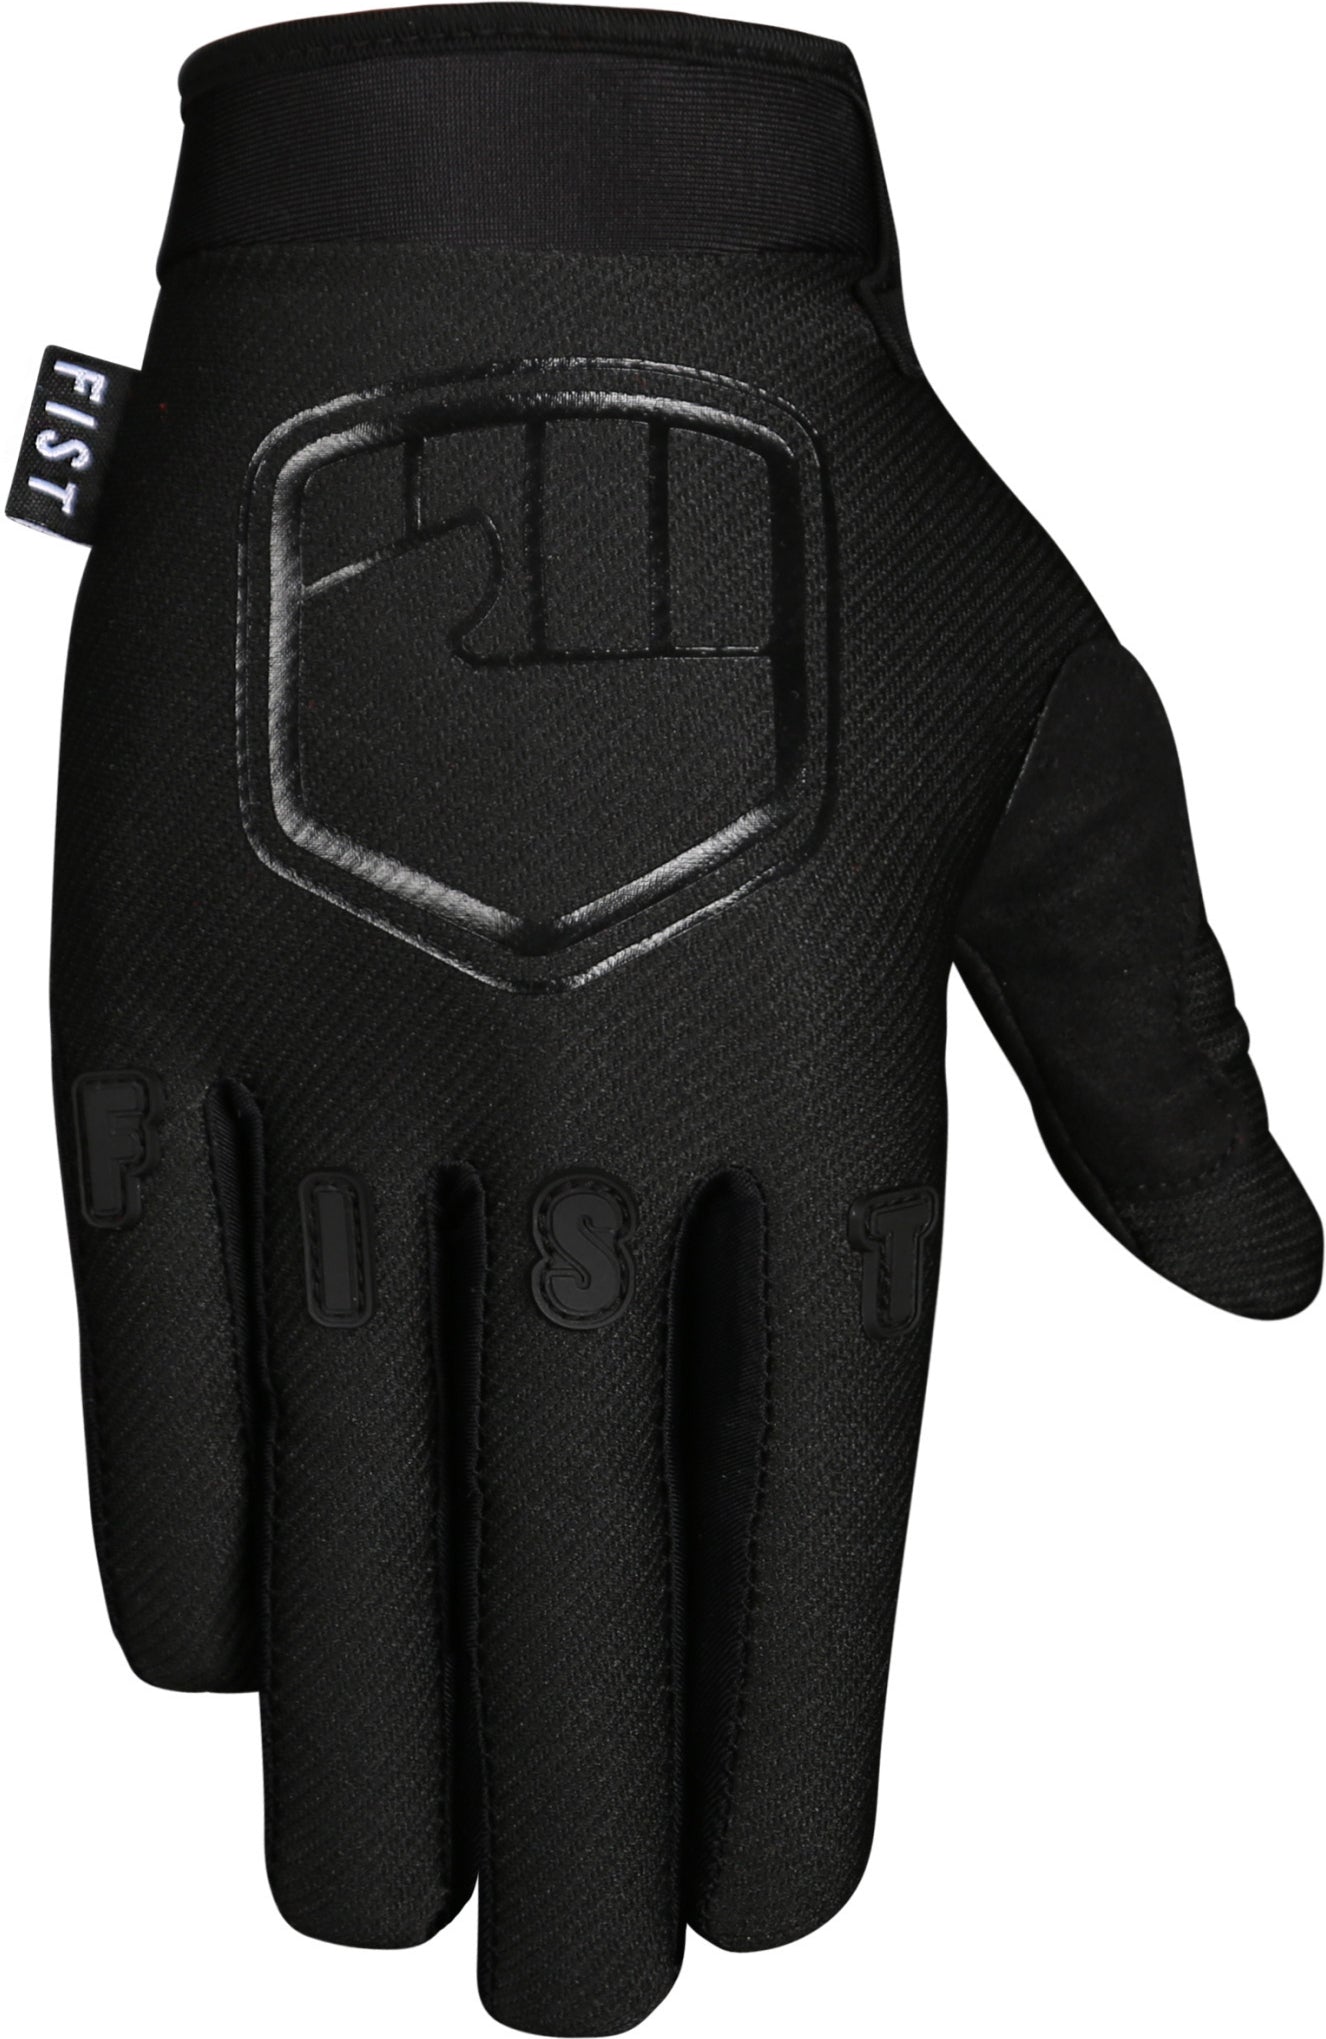 Fist Black Stocker Handschuhe / Glove